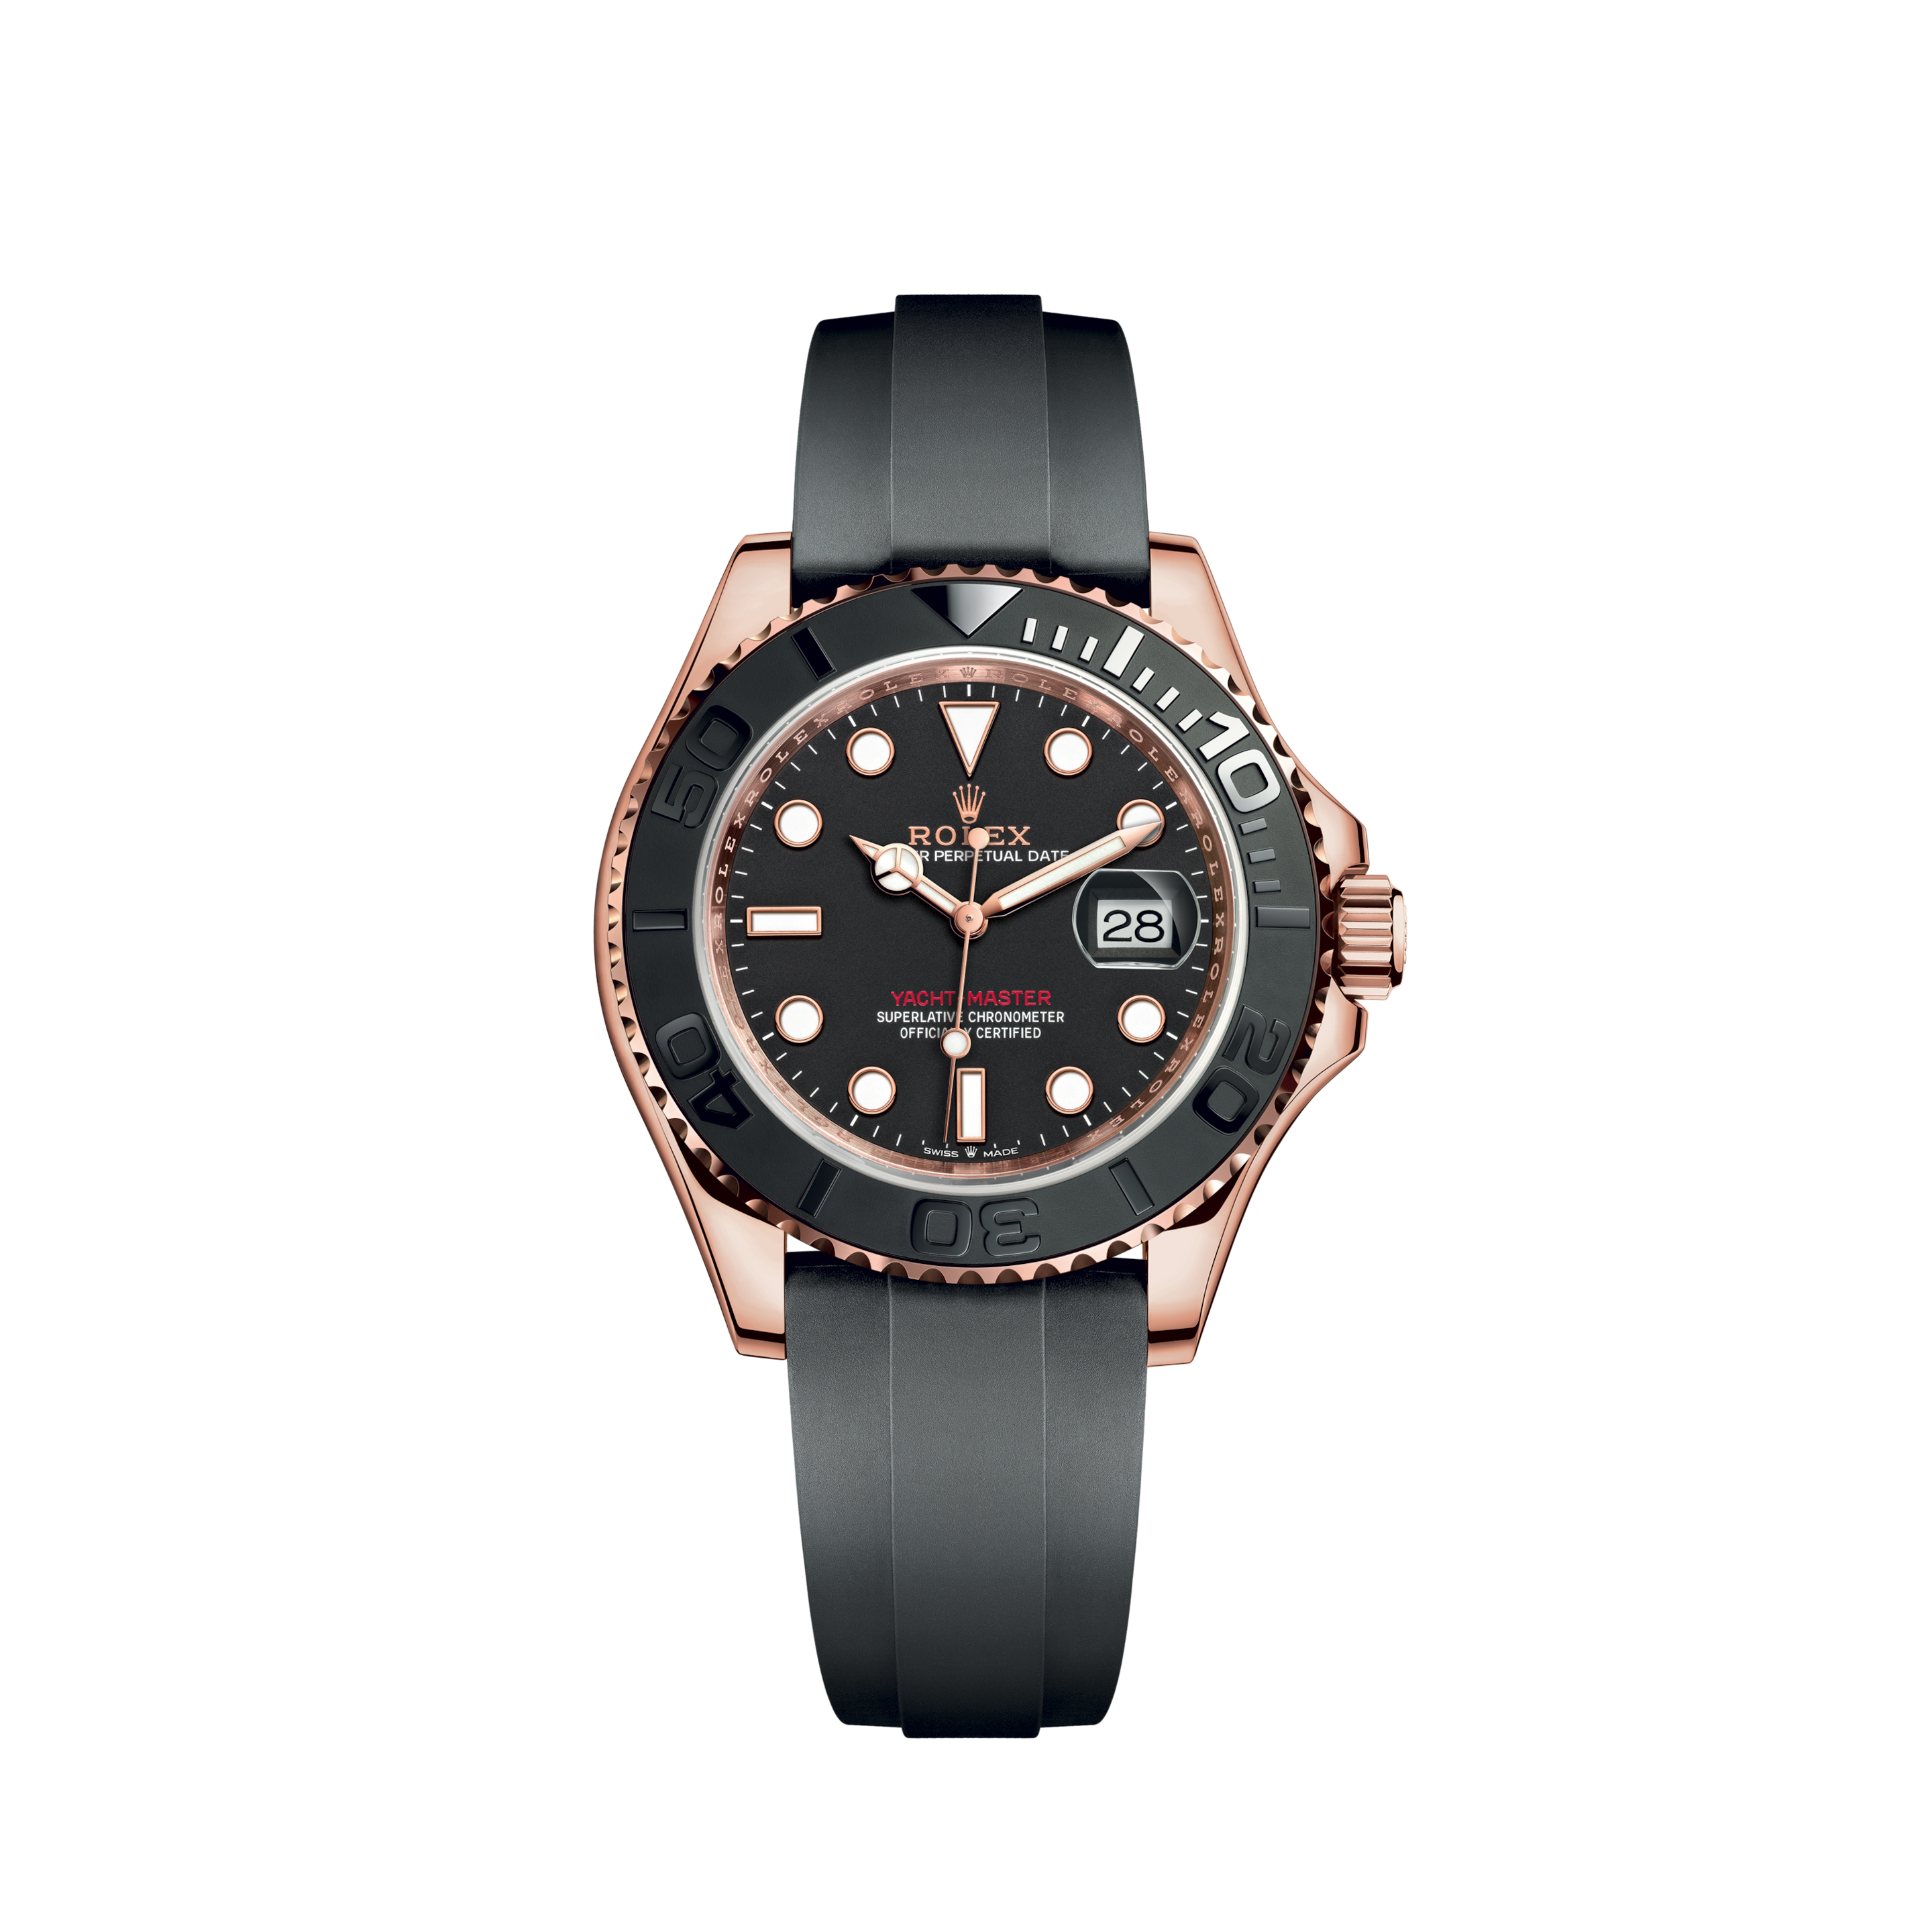 Rolex Datejust 68274 1.60ct Diamond Dial Bezel Automatic Ss Midsize Watch 32mmRolex Datejust 68274 Stainless Steel Midsize Watch